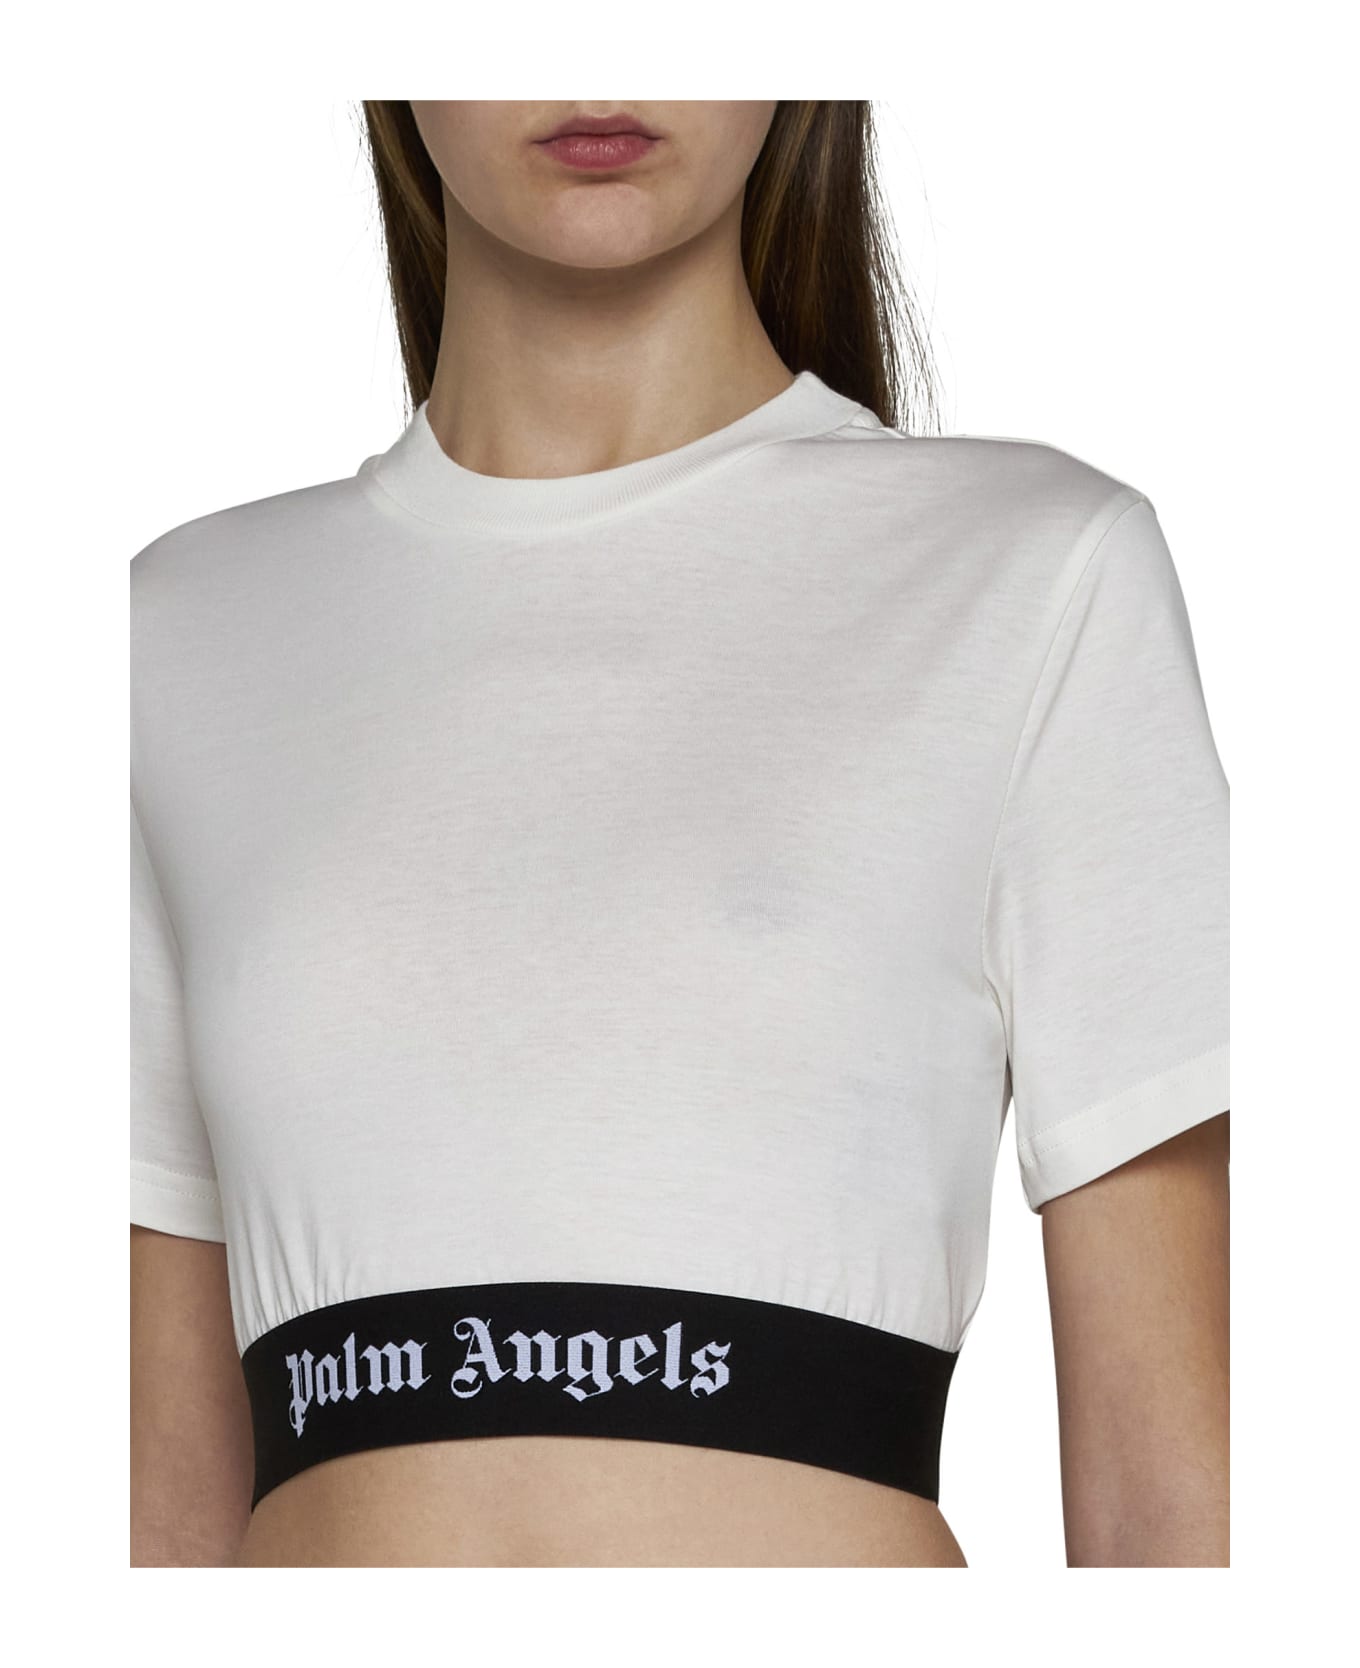 Palm Angels Cotton Crop Top - White Tシャツ